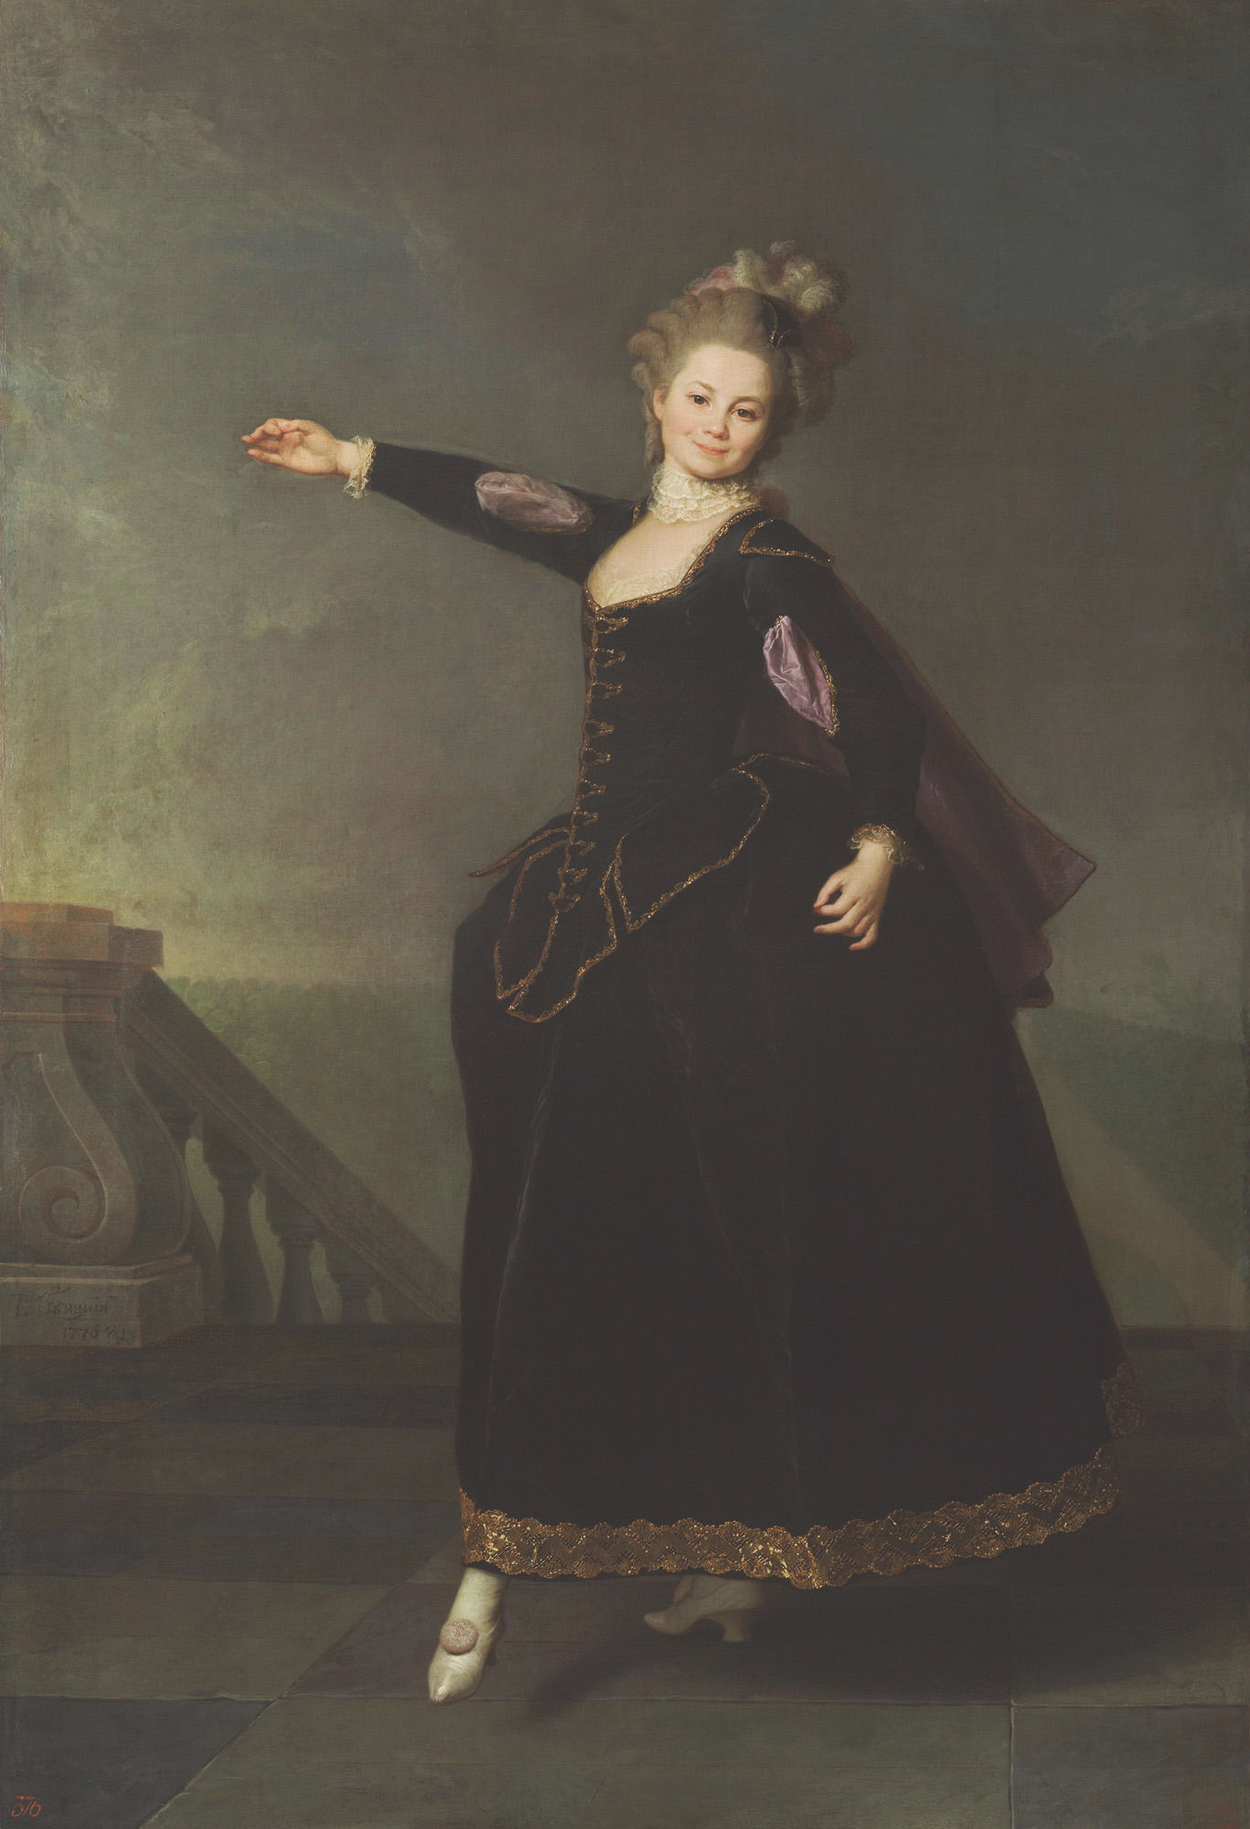 Portrait of Natalia Borscheva by Dmitry Grigoryevich Levitsky - 1776 - 196,5 х 134,5 cm State Russian Museum